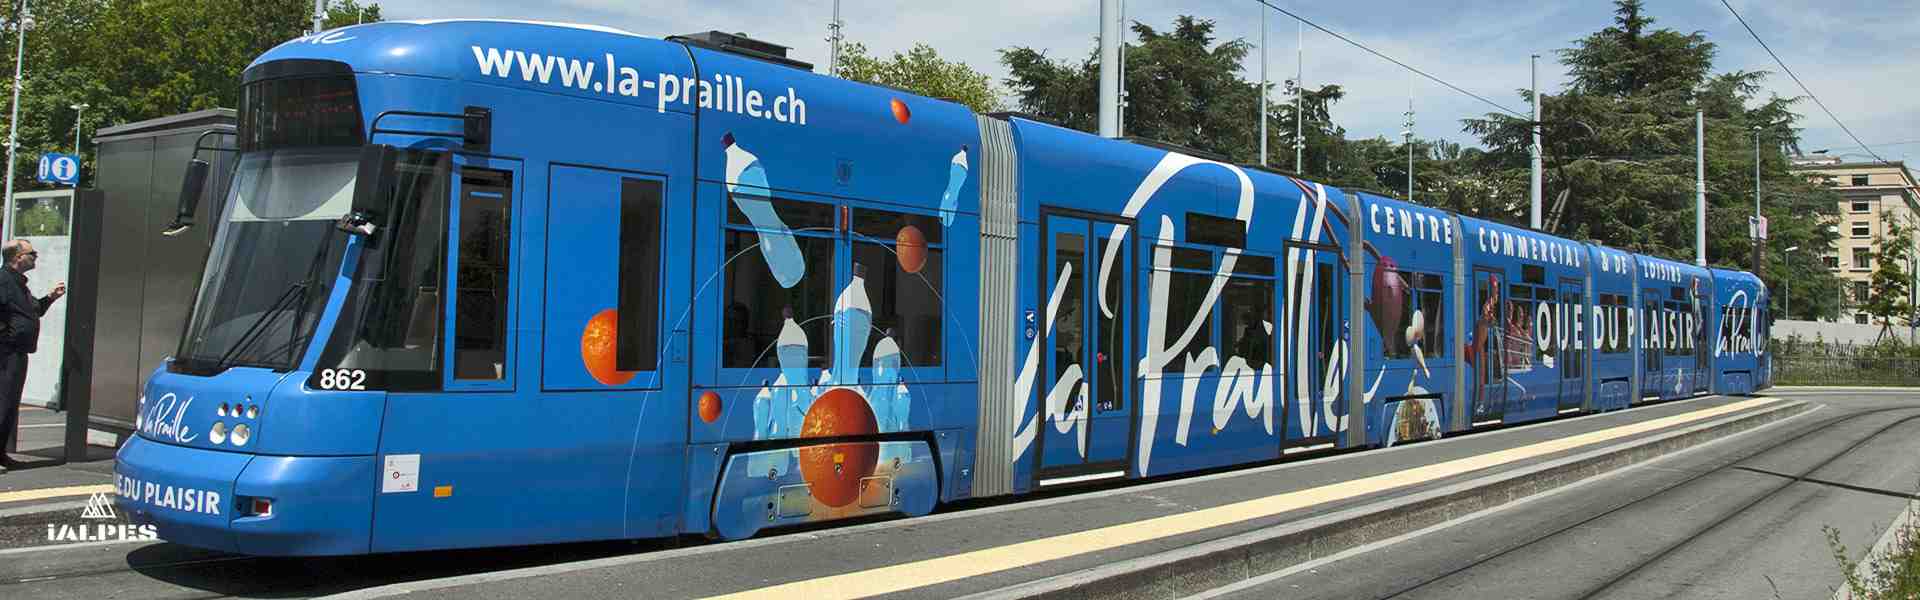 Genève transport urbain en tram